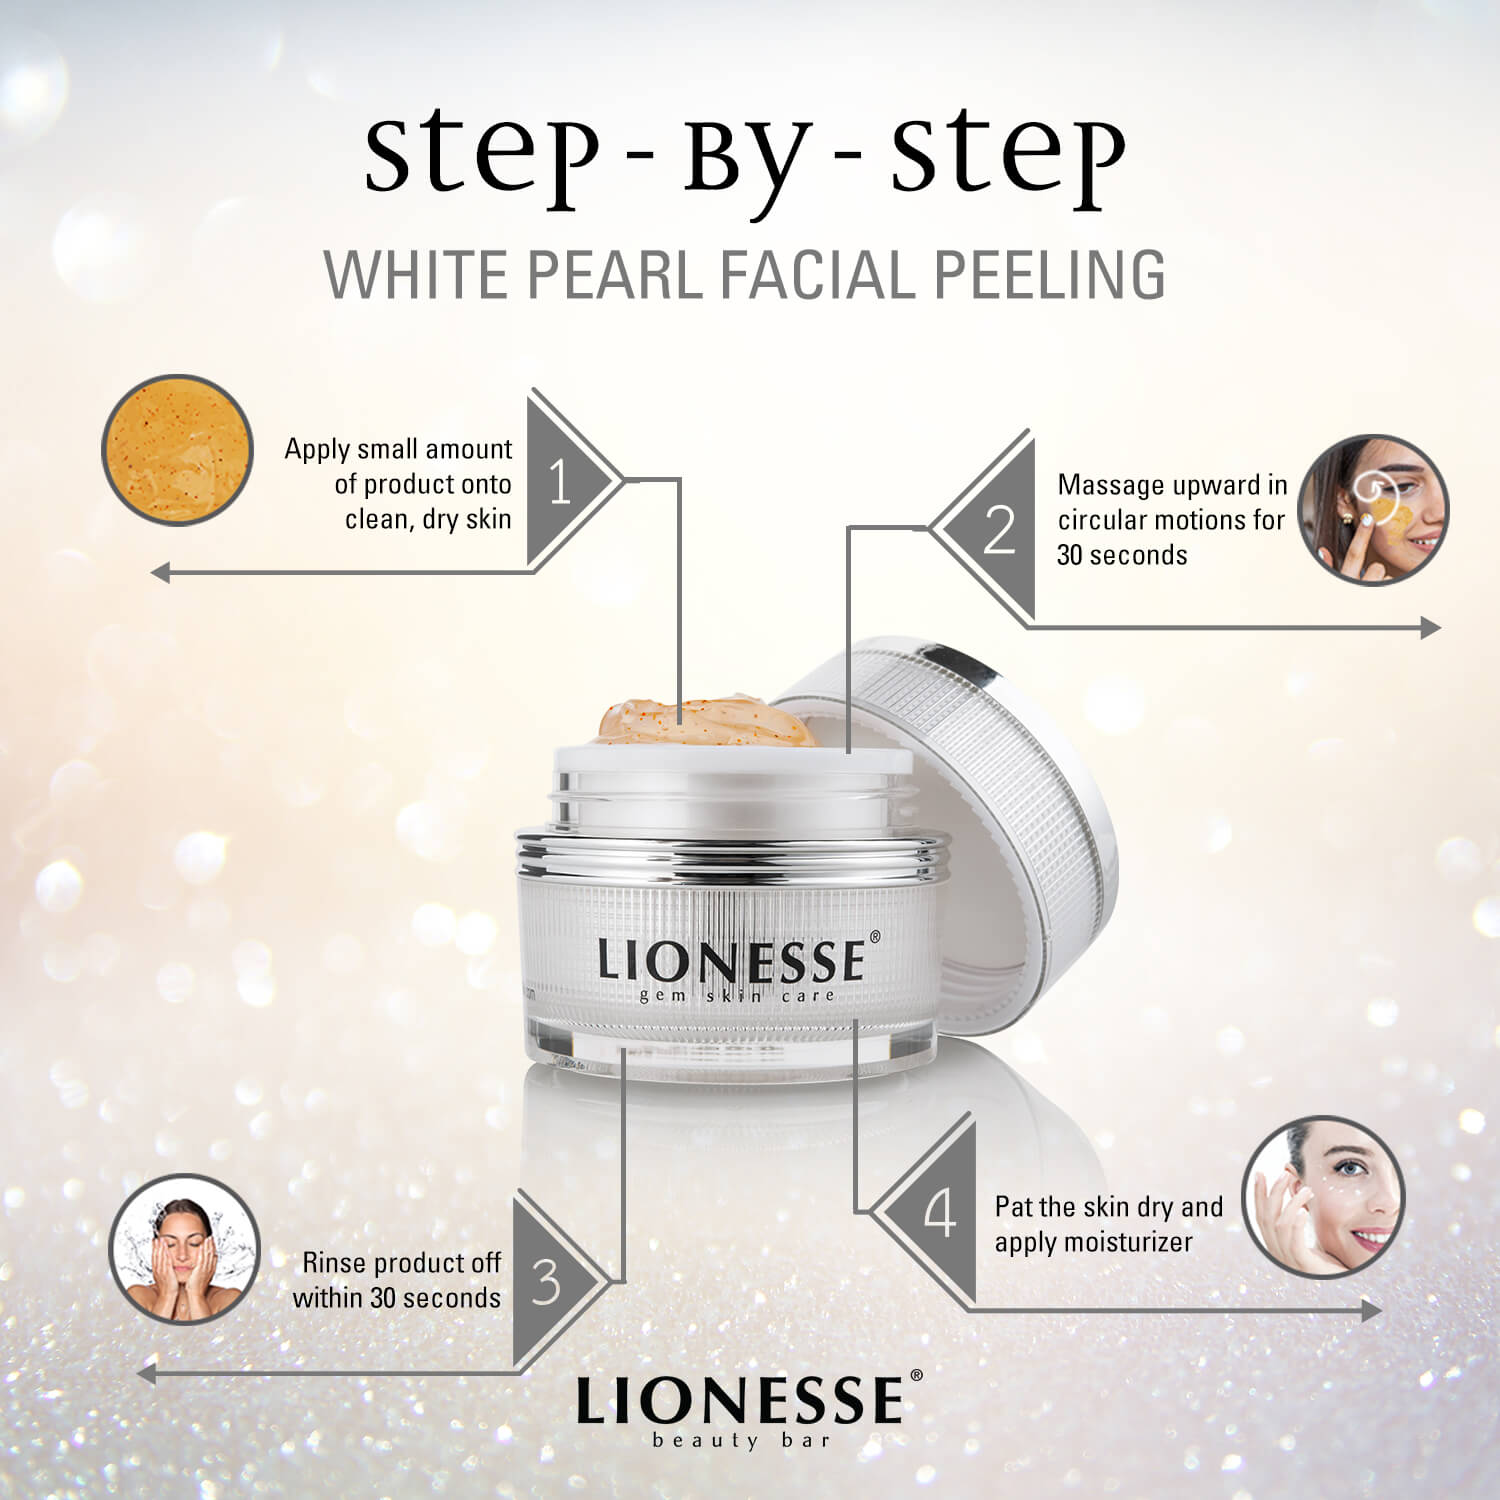 Facial peeling infographic